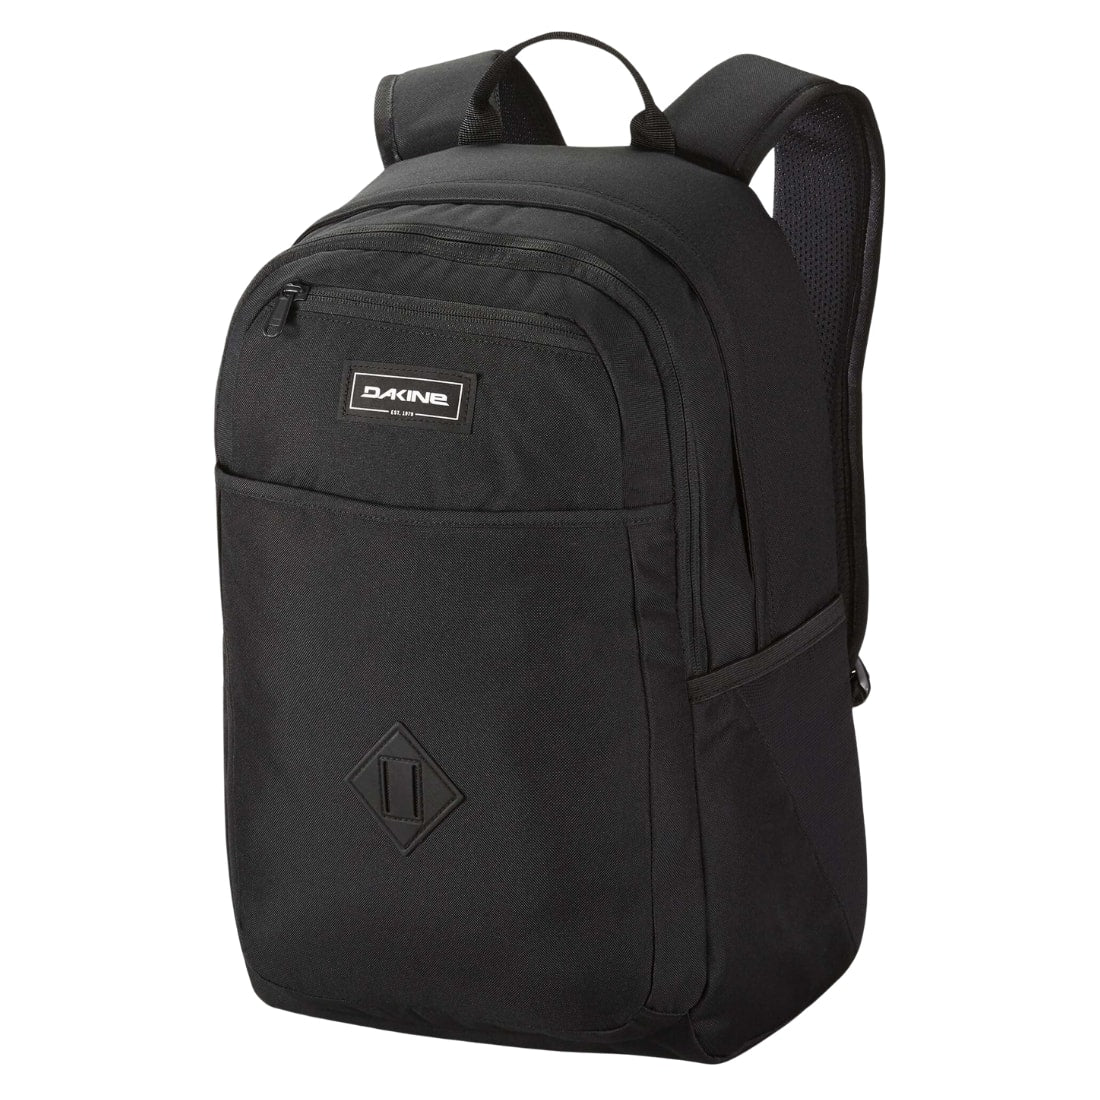 Dakine Essentials Pack 26L Backpack - Black/White - Backpack by Dakine 26L